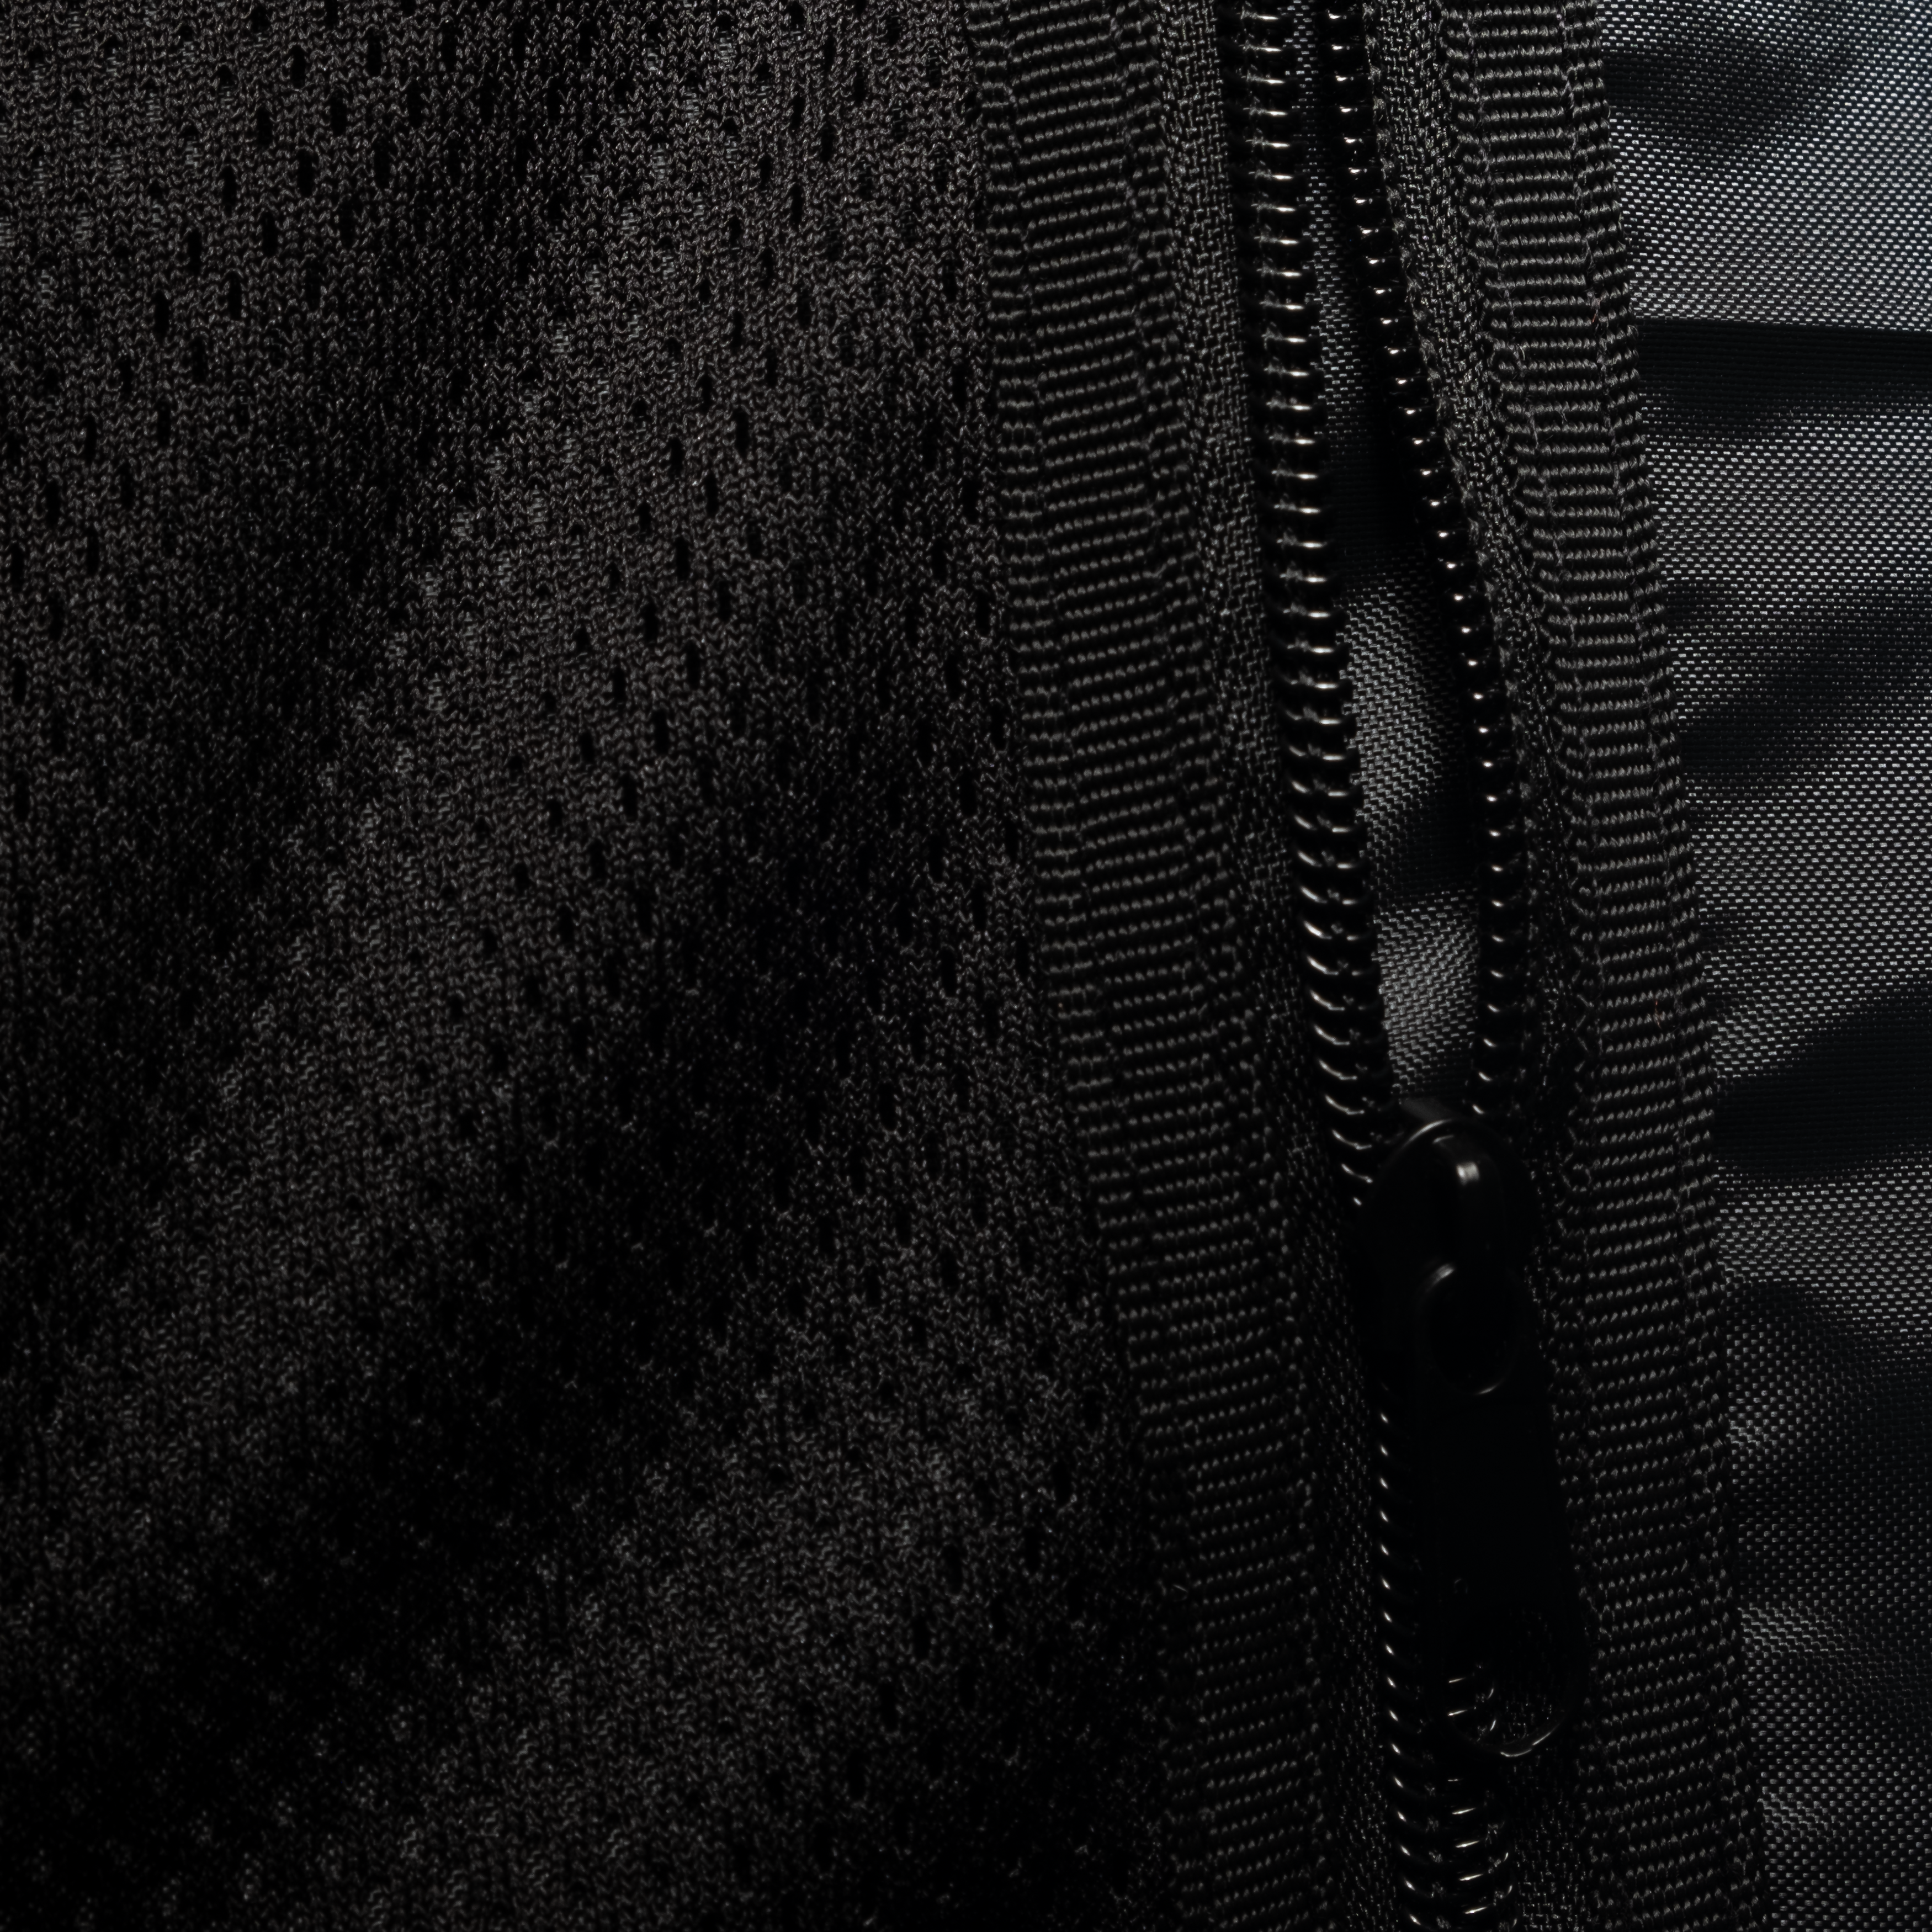 Tactical Backpack, Dark Camo - MUSL BUDDIES